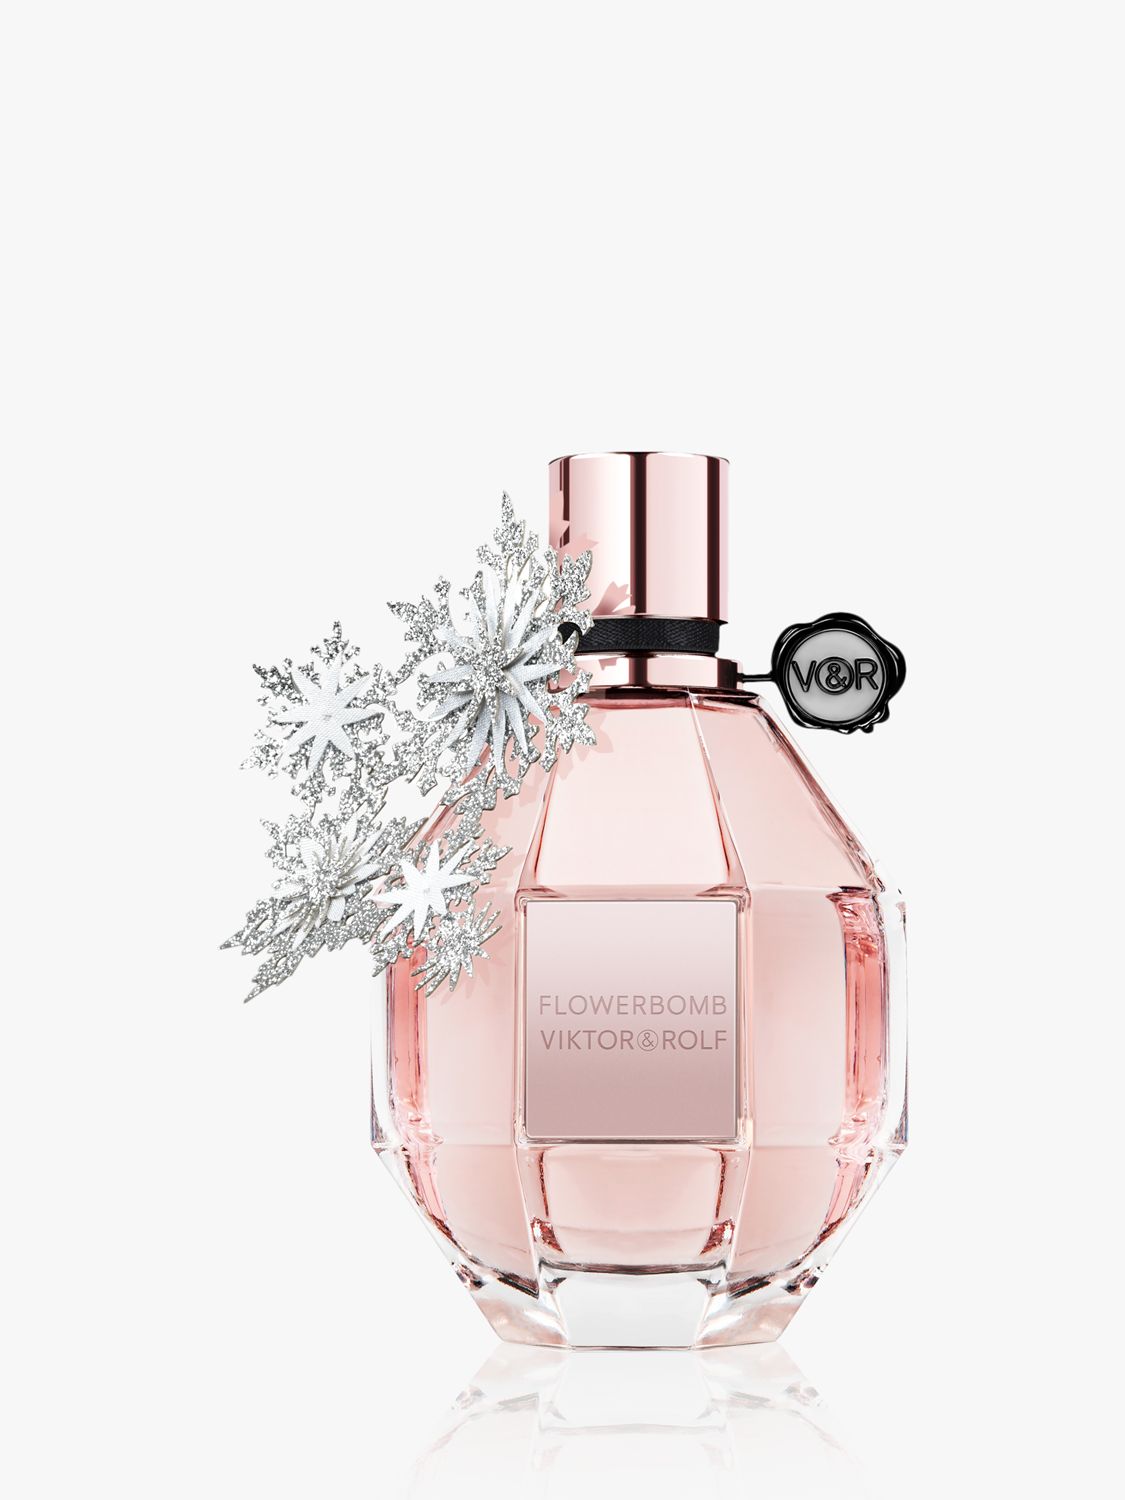 Offer Ieder toevoegen aan Viktor & Rolf Flowerbomb Eau de Parfum 100ml Limited Edition